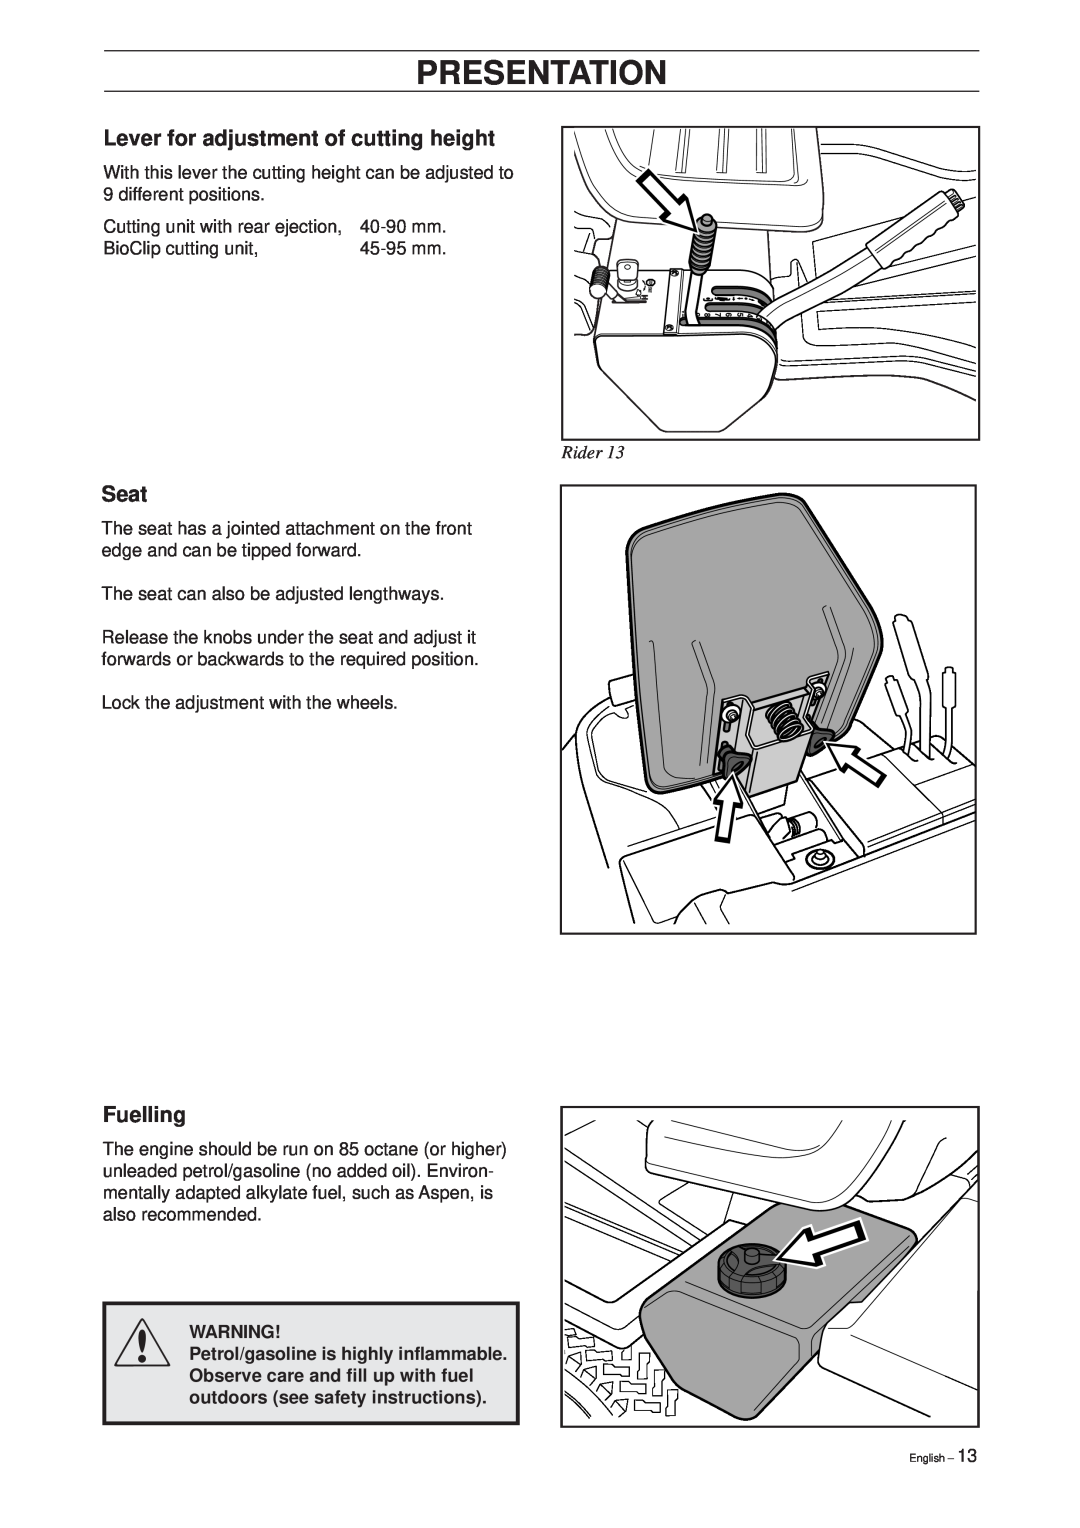 Husqvarna 39765, 13 Bio, 11 Bio manual Lever for adjustment of cutting height, Seat, Fuelling, Rider, Presentation 